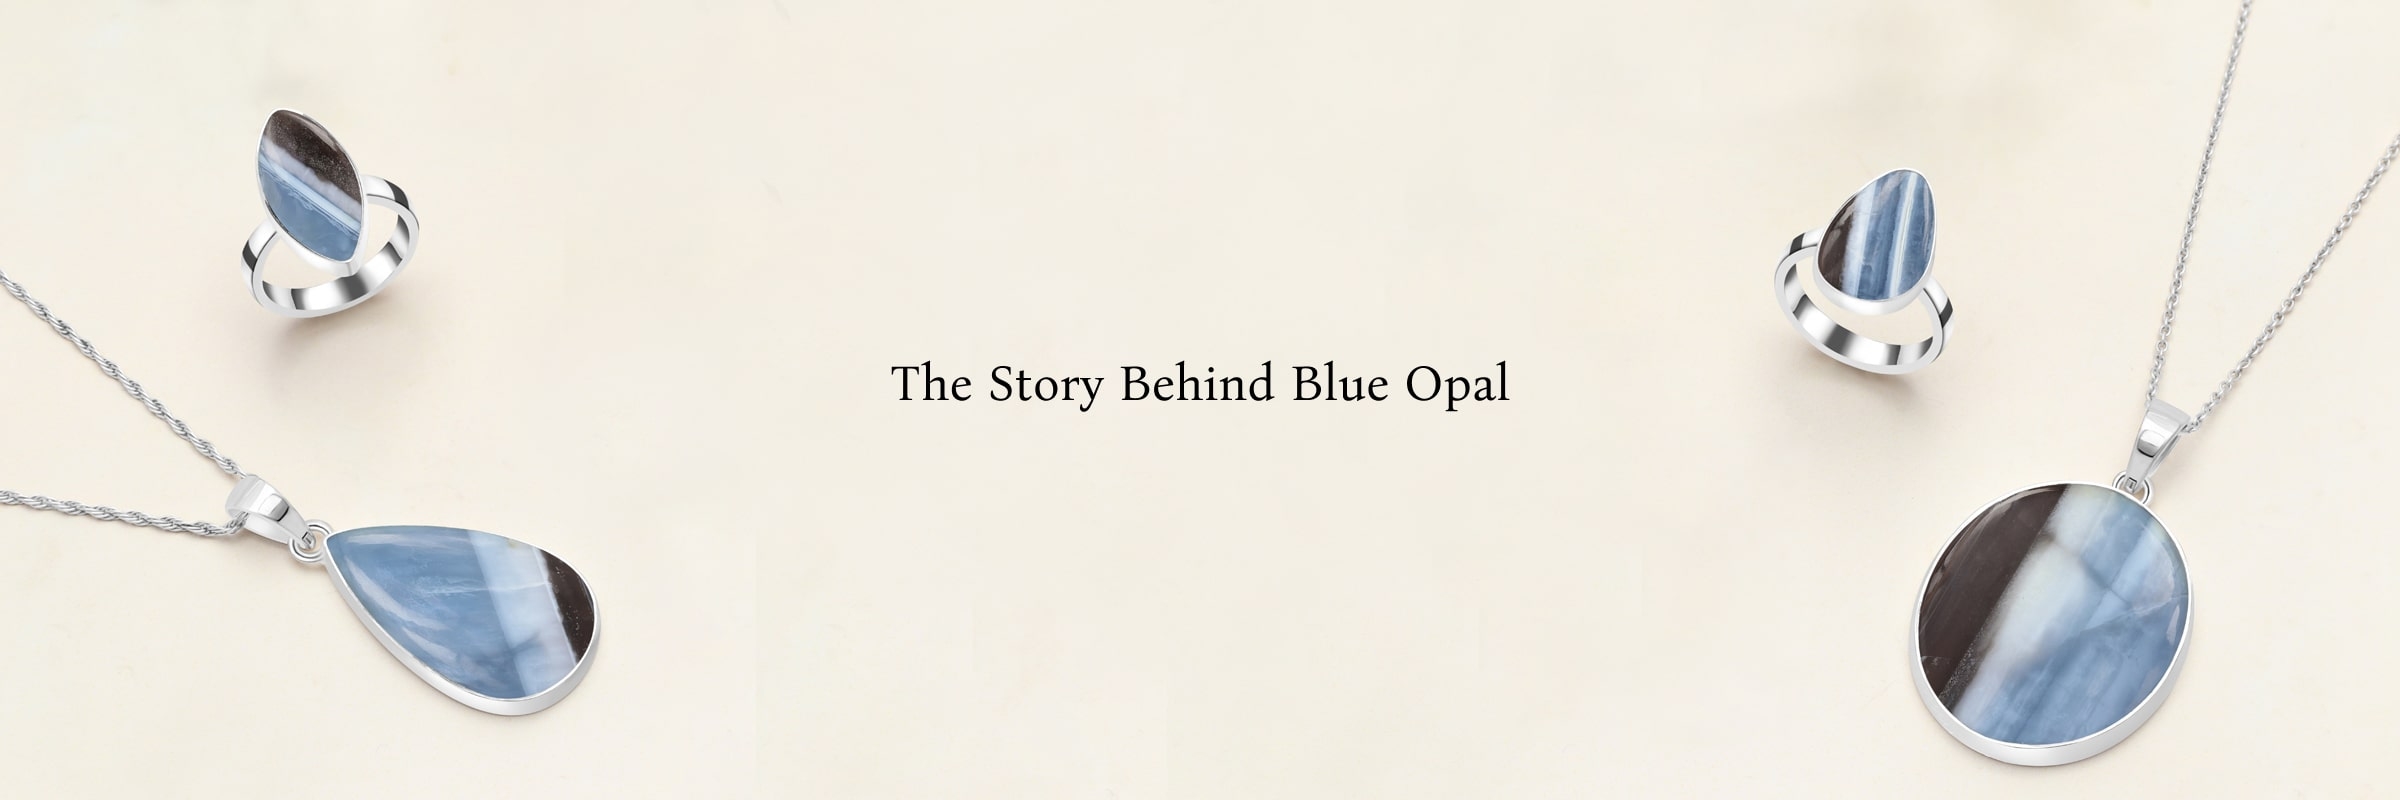 History of Blue Opal Stone